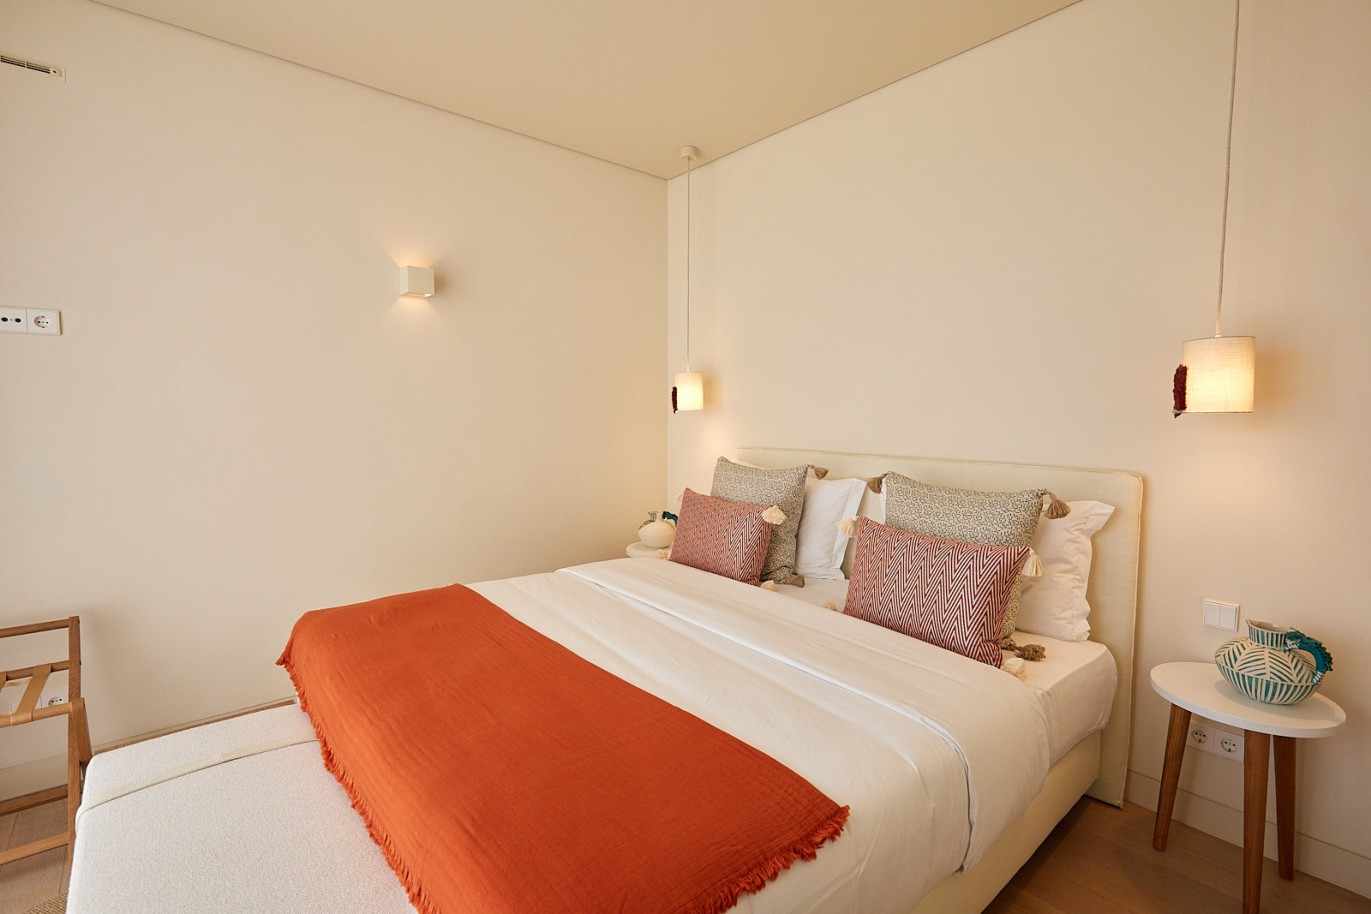 2 bedroom apartment in resort, for sale in Porches, Algarve_228776